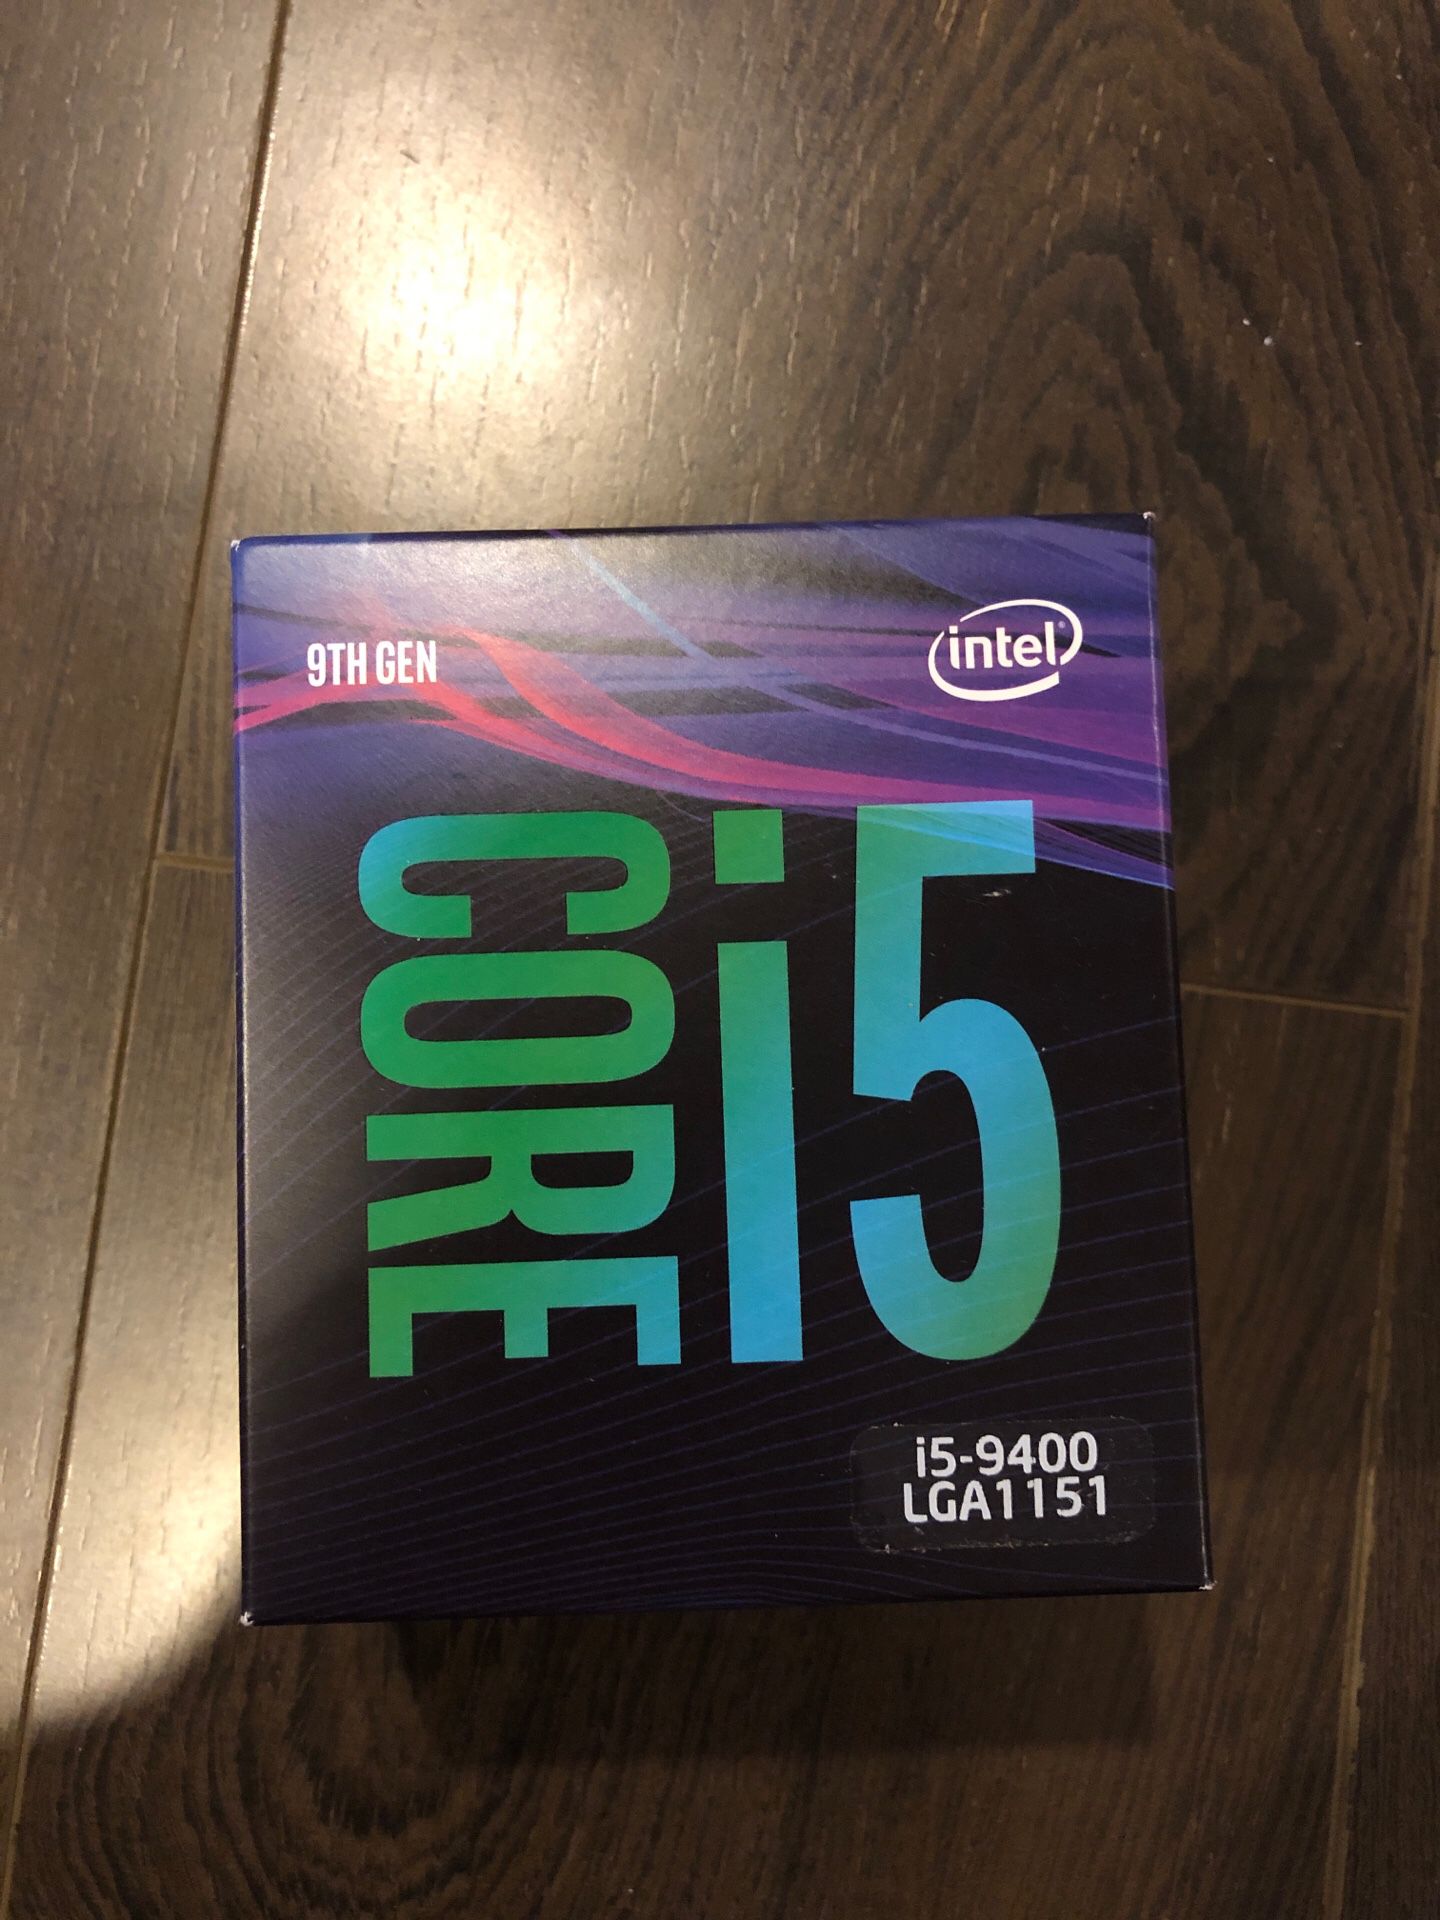 Intel Core i5-9400 Desktop Processor 6 Cores up to 4.1 GHz Turbo LGA1151